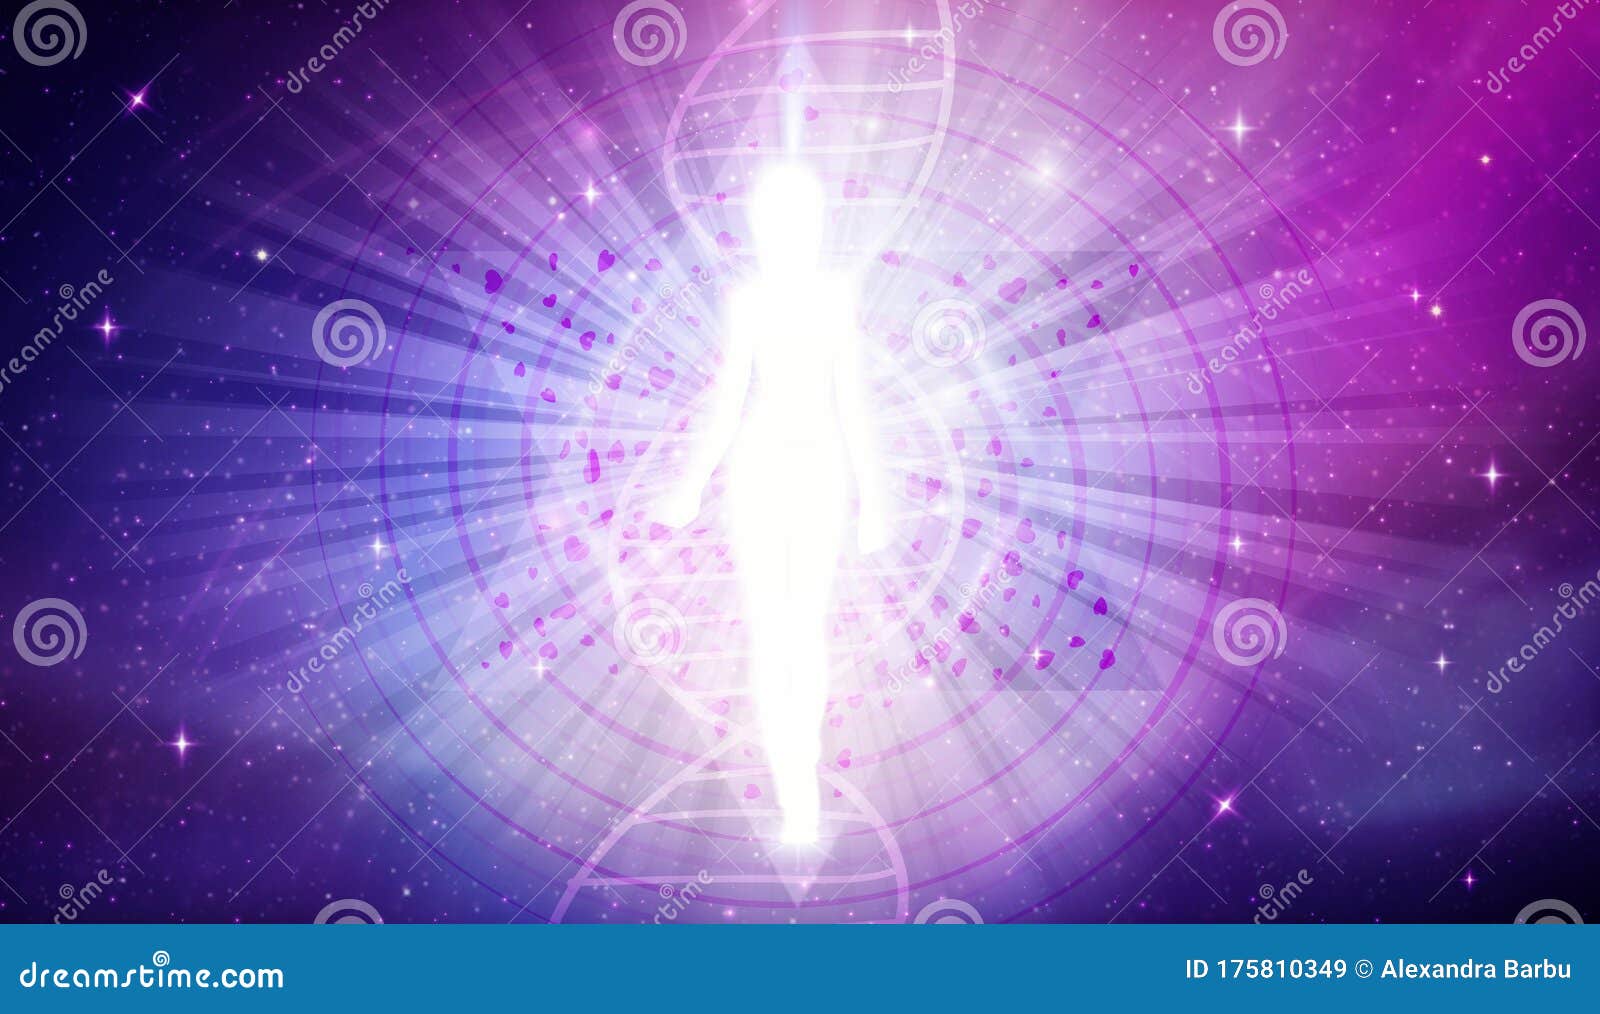 spiritual energy power, violet flame power, dna spiral, universe fractals, portal